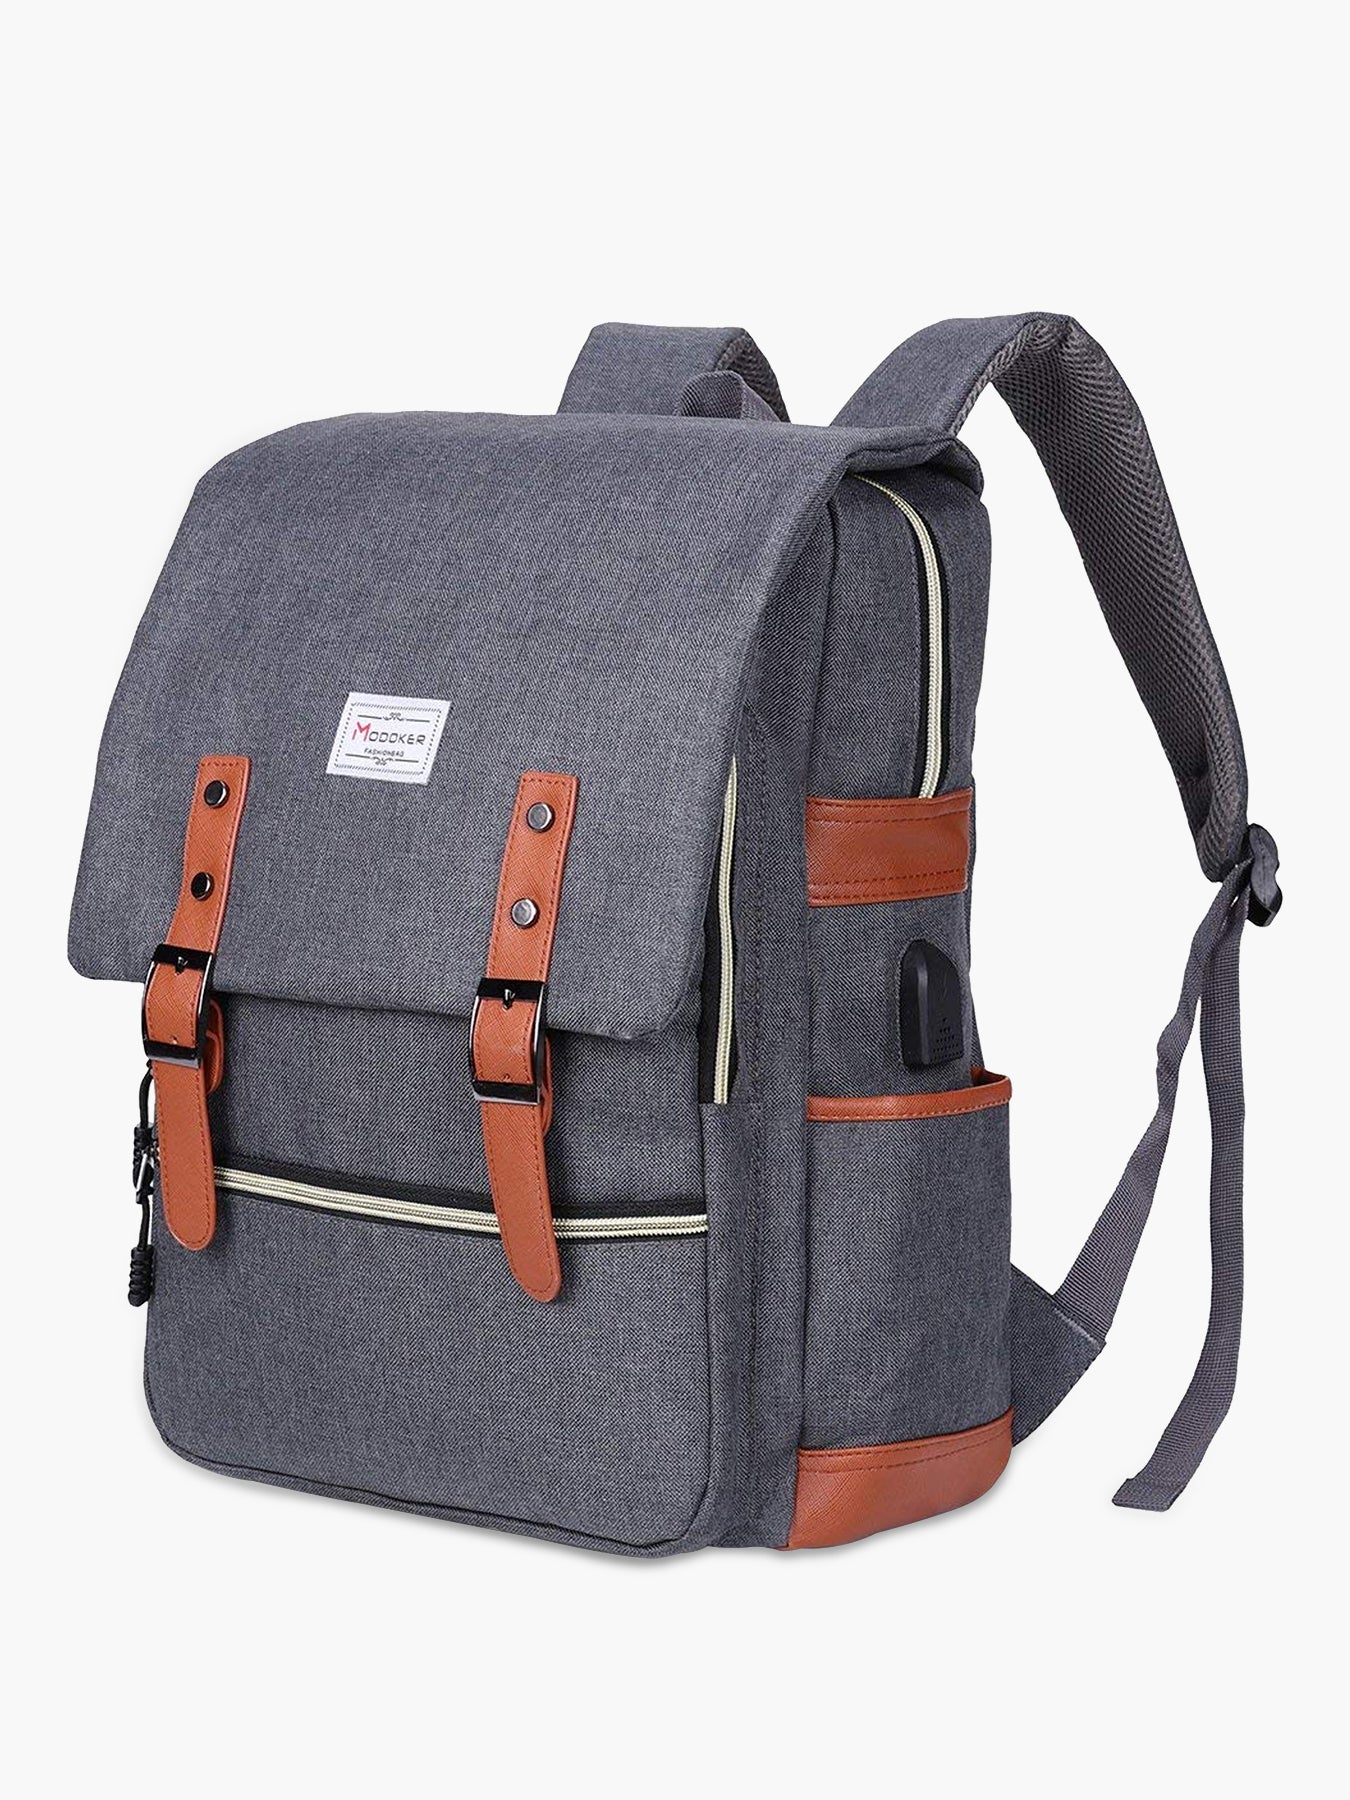 Canvas Backpack Unisex Vintage Casual Rucksack 17 inch Laptop Daypacks  Schoolbag